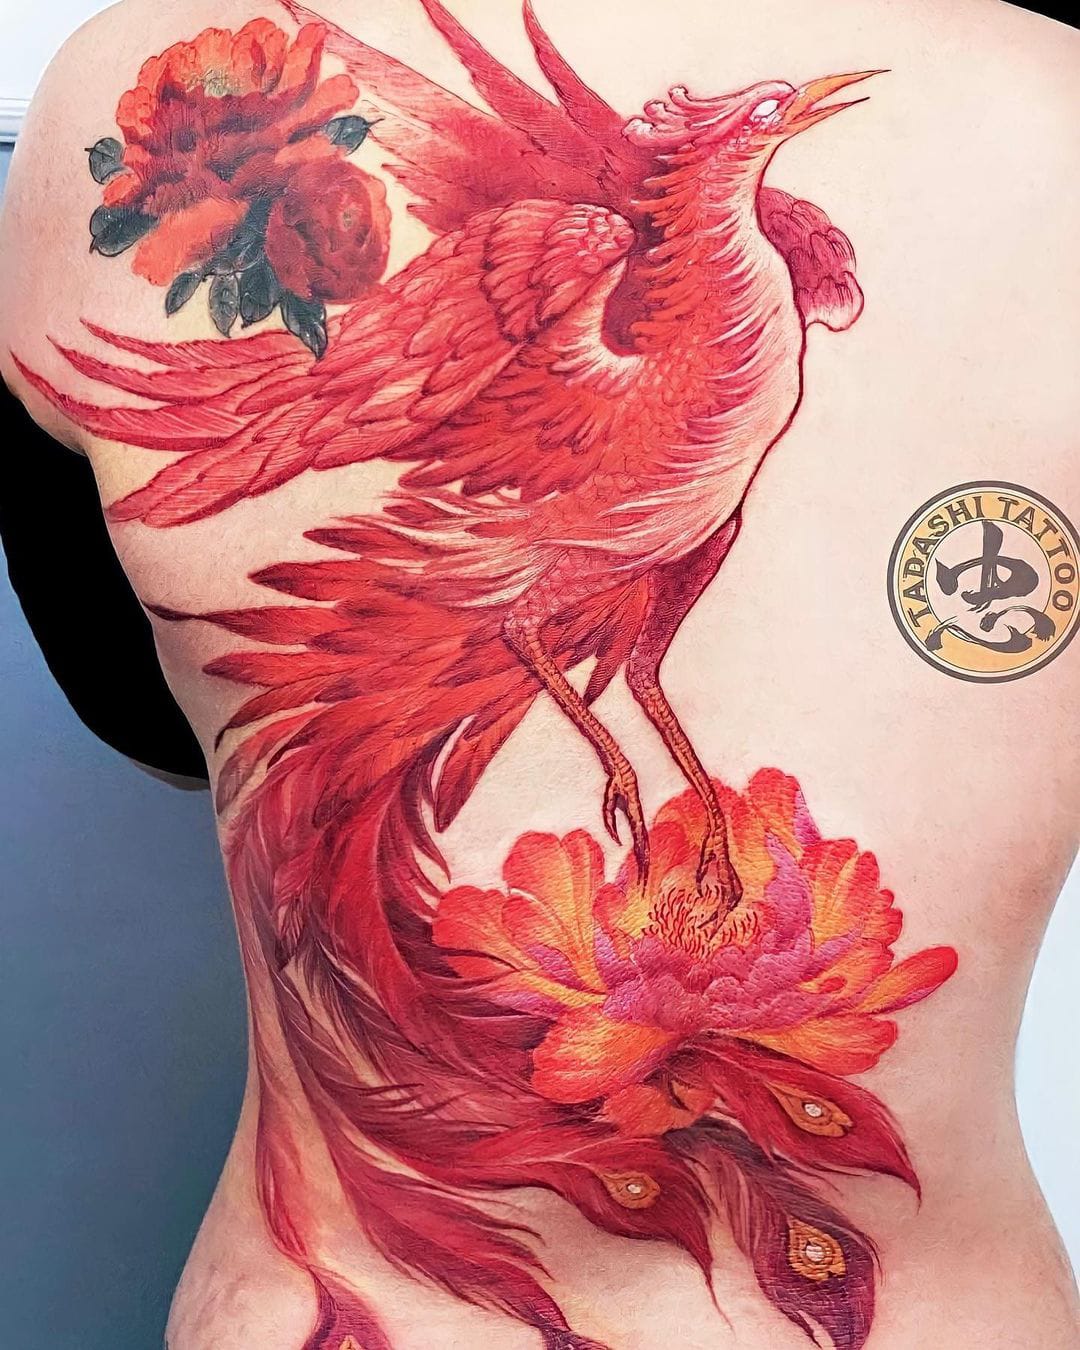 15 Trendy Phoenix Tattoo For Men